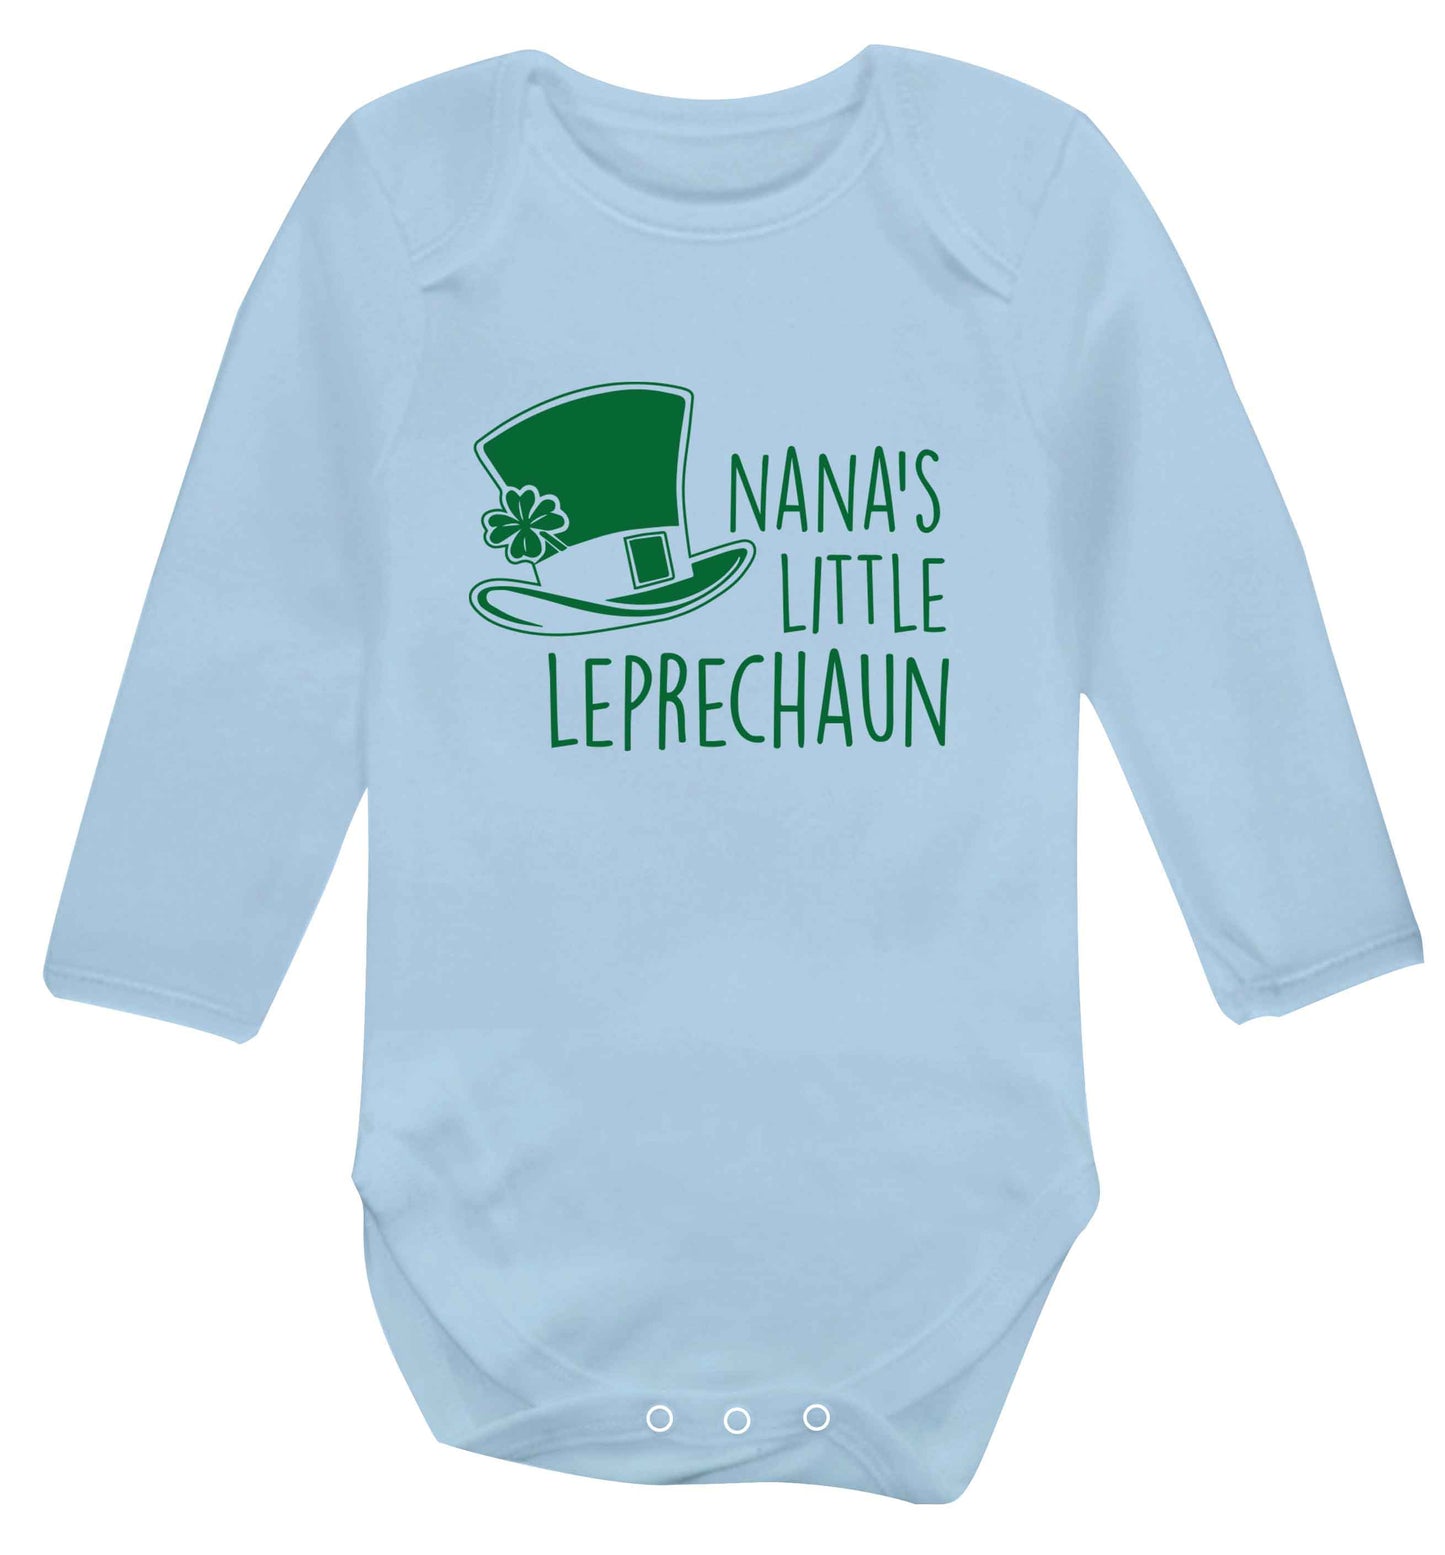 Nana's little leprechaun baby vest long sleeved pale blue 6-12 months